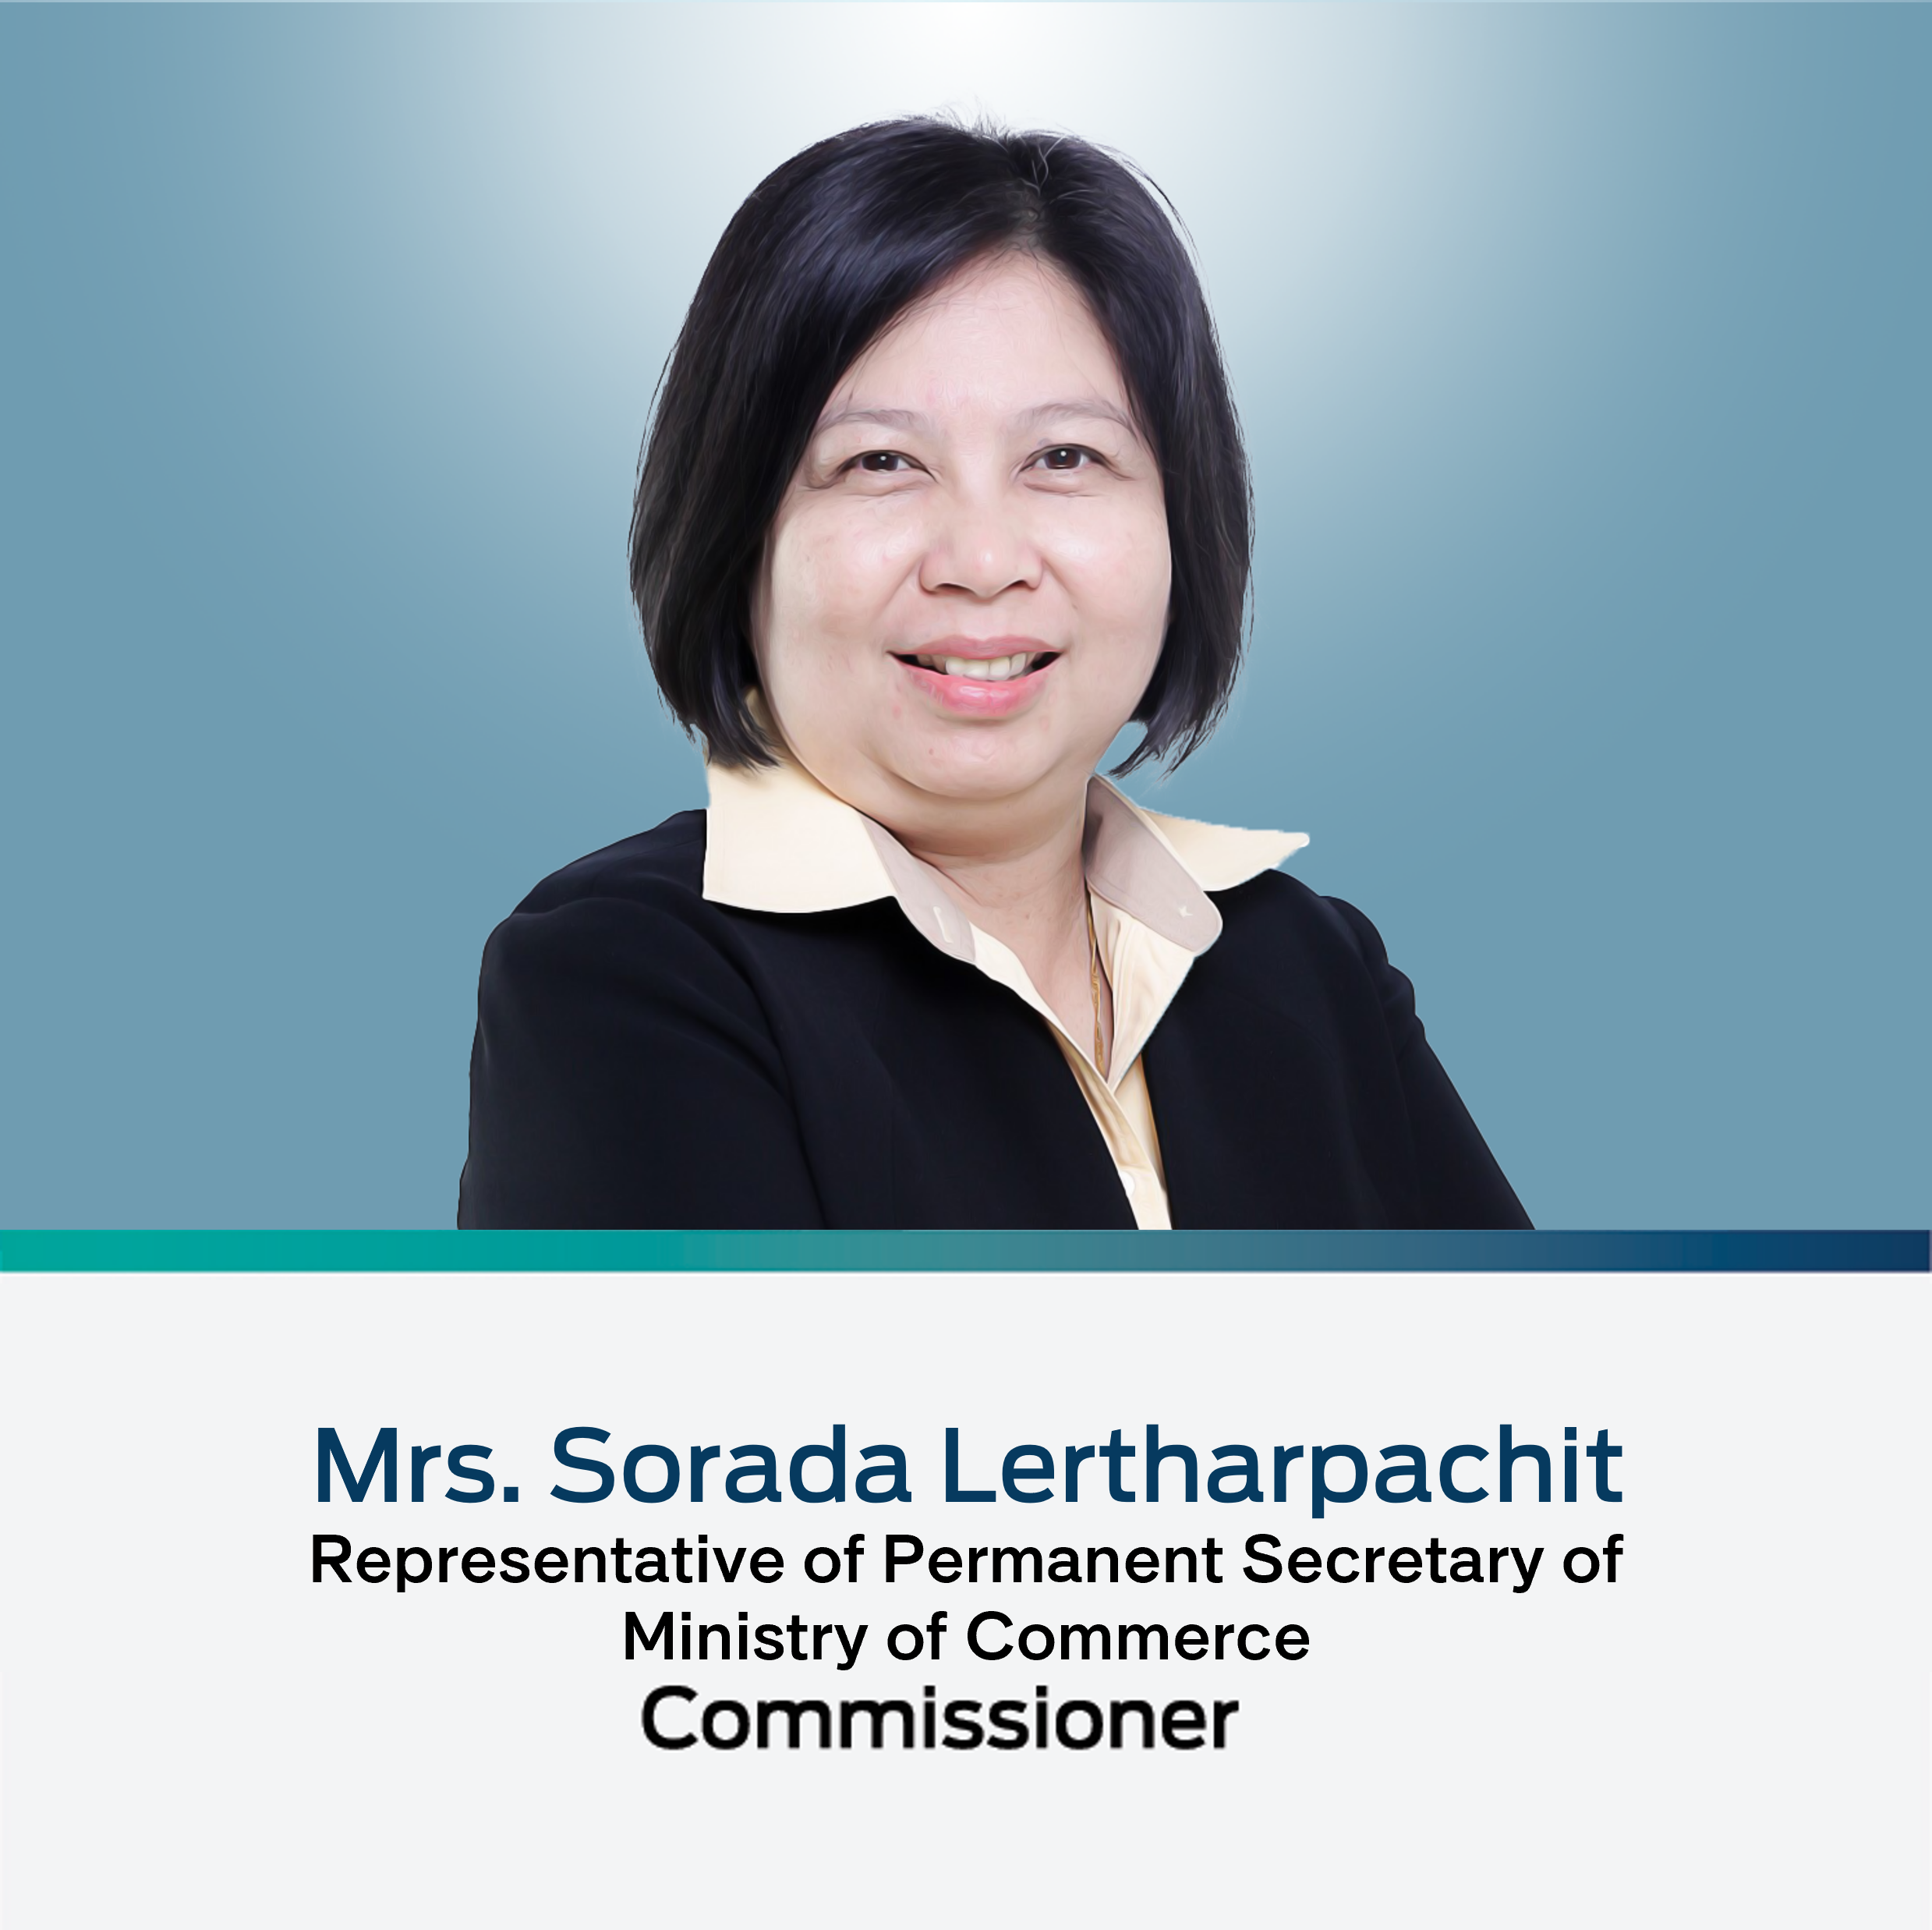 Mrs. Sorada Lertharpachit